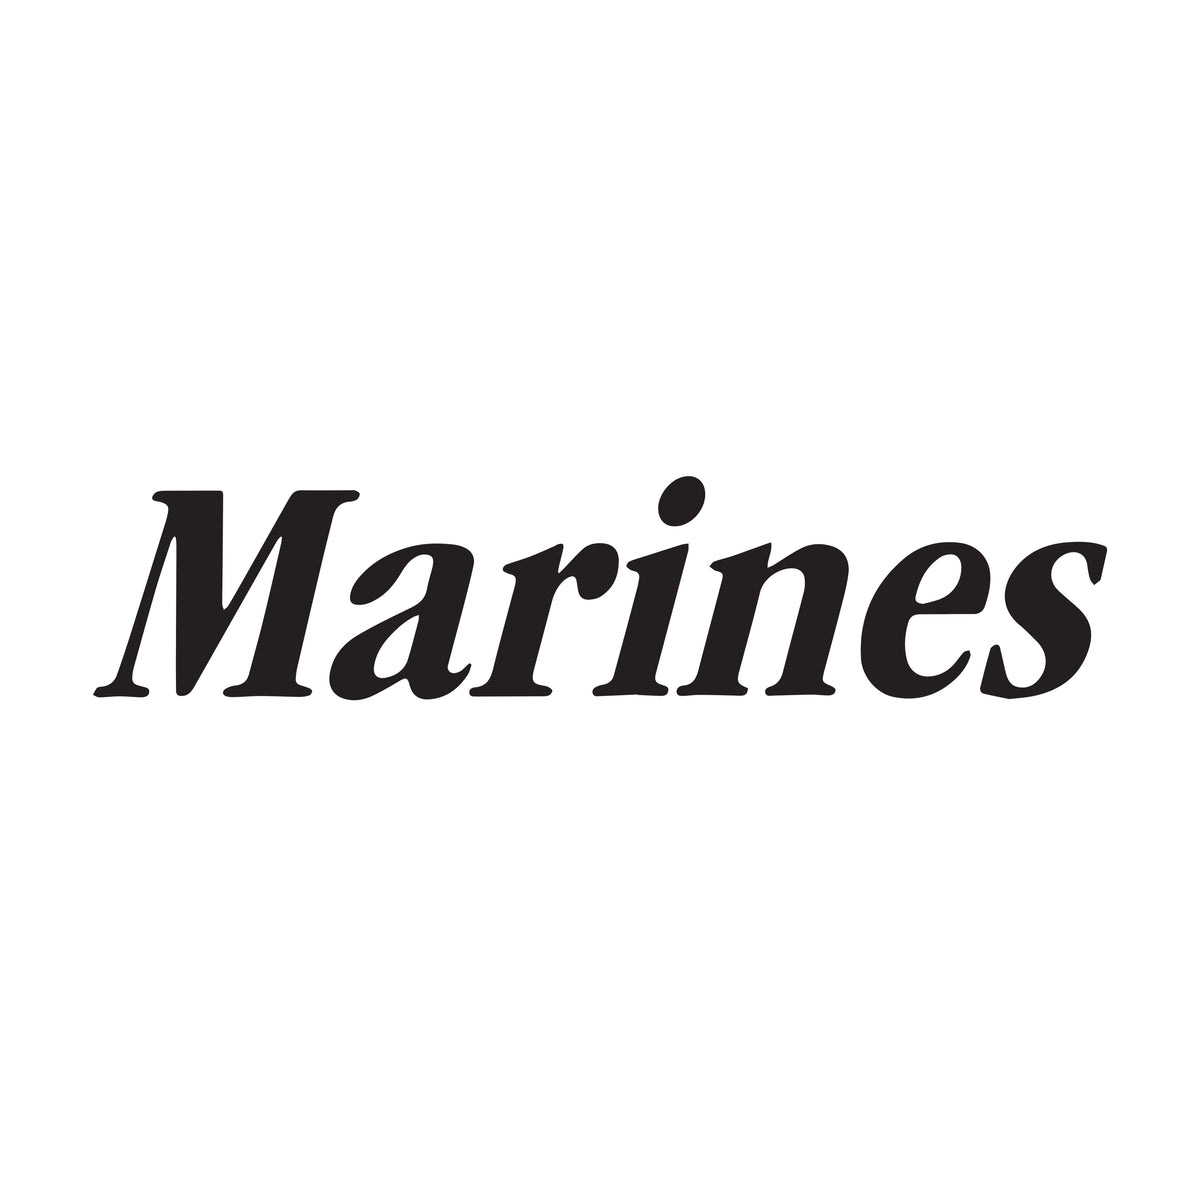 Closeout Italicized Marines Safety Orange Performance Tee